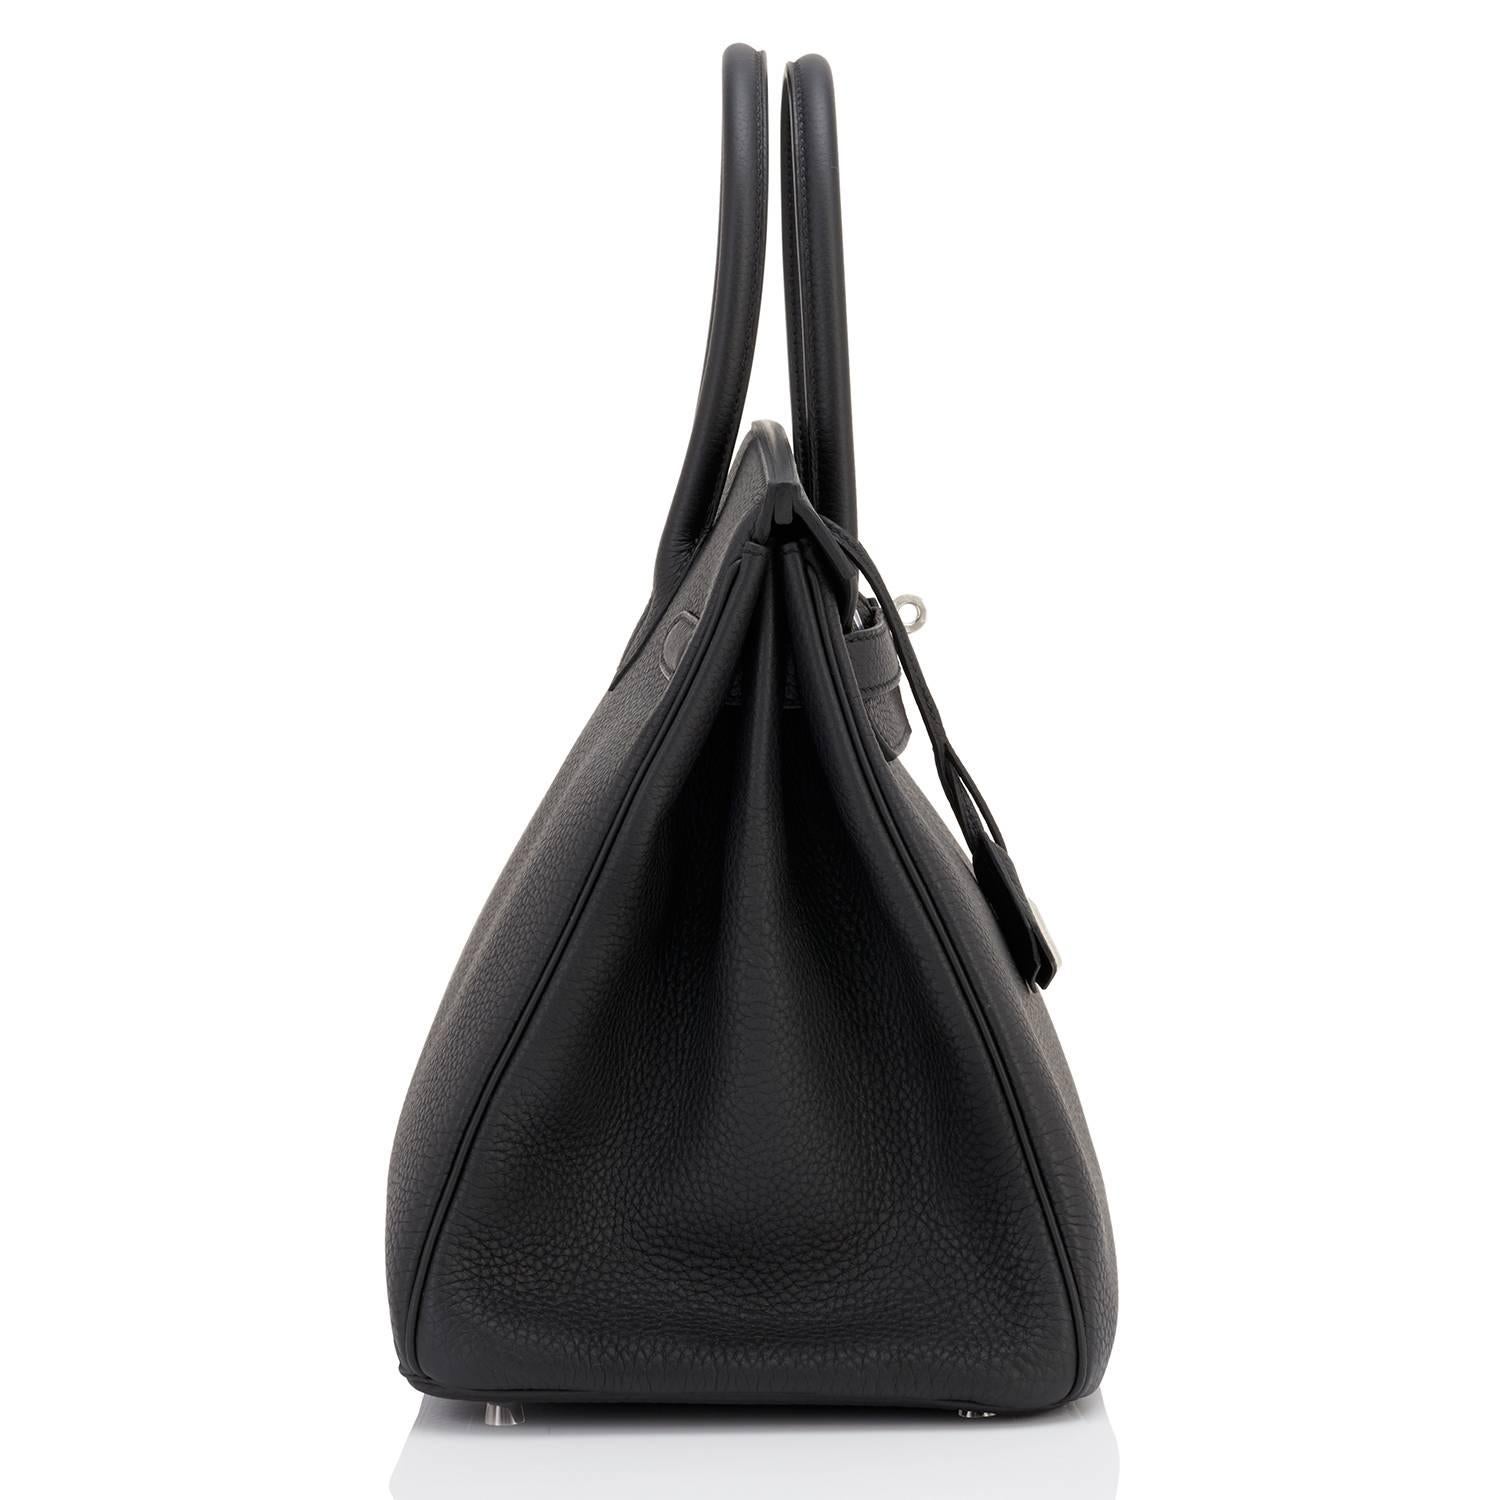 Hermes Birkin 35cm Black Togo Palladium Hardware Bag NEW 2